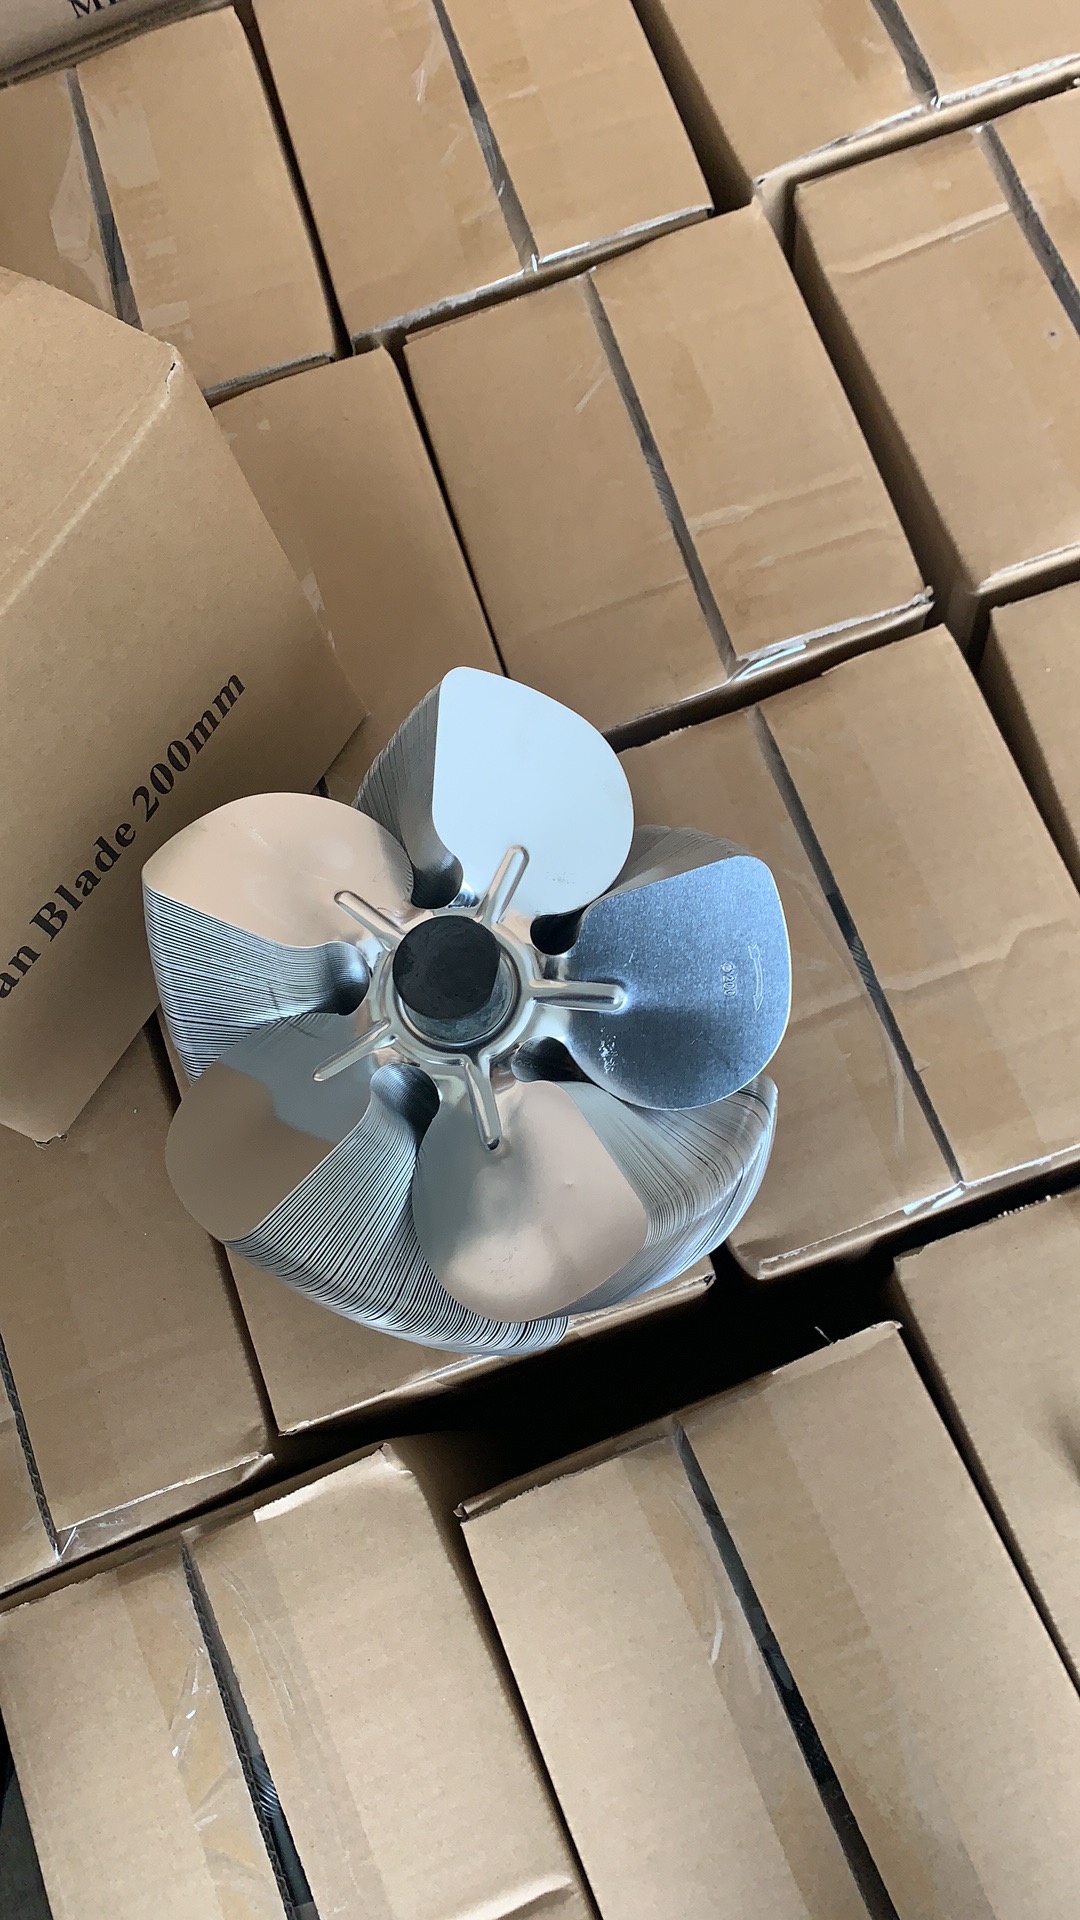 Shipment: Aluminum fan blade to USA